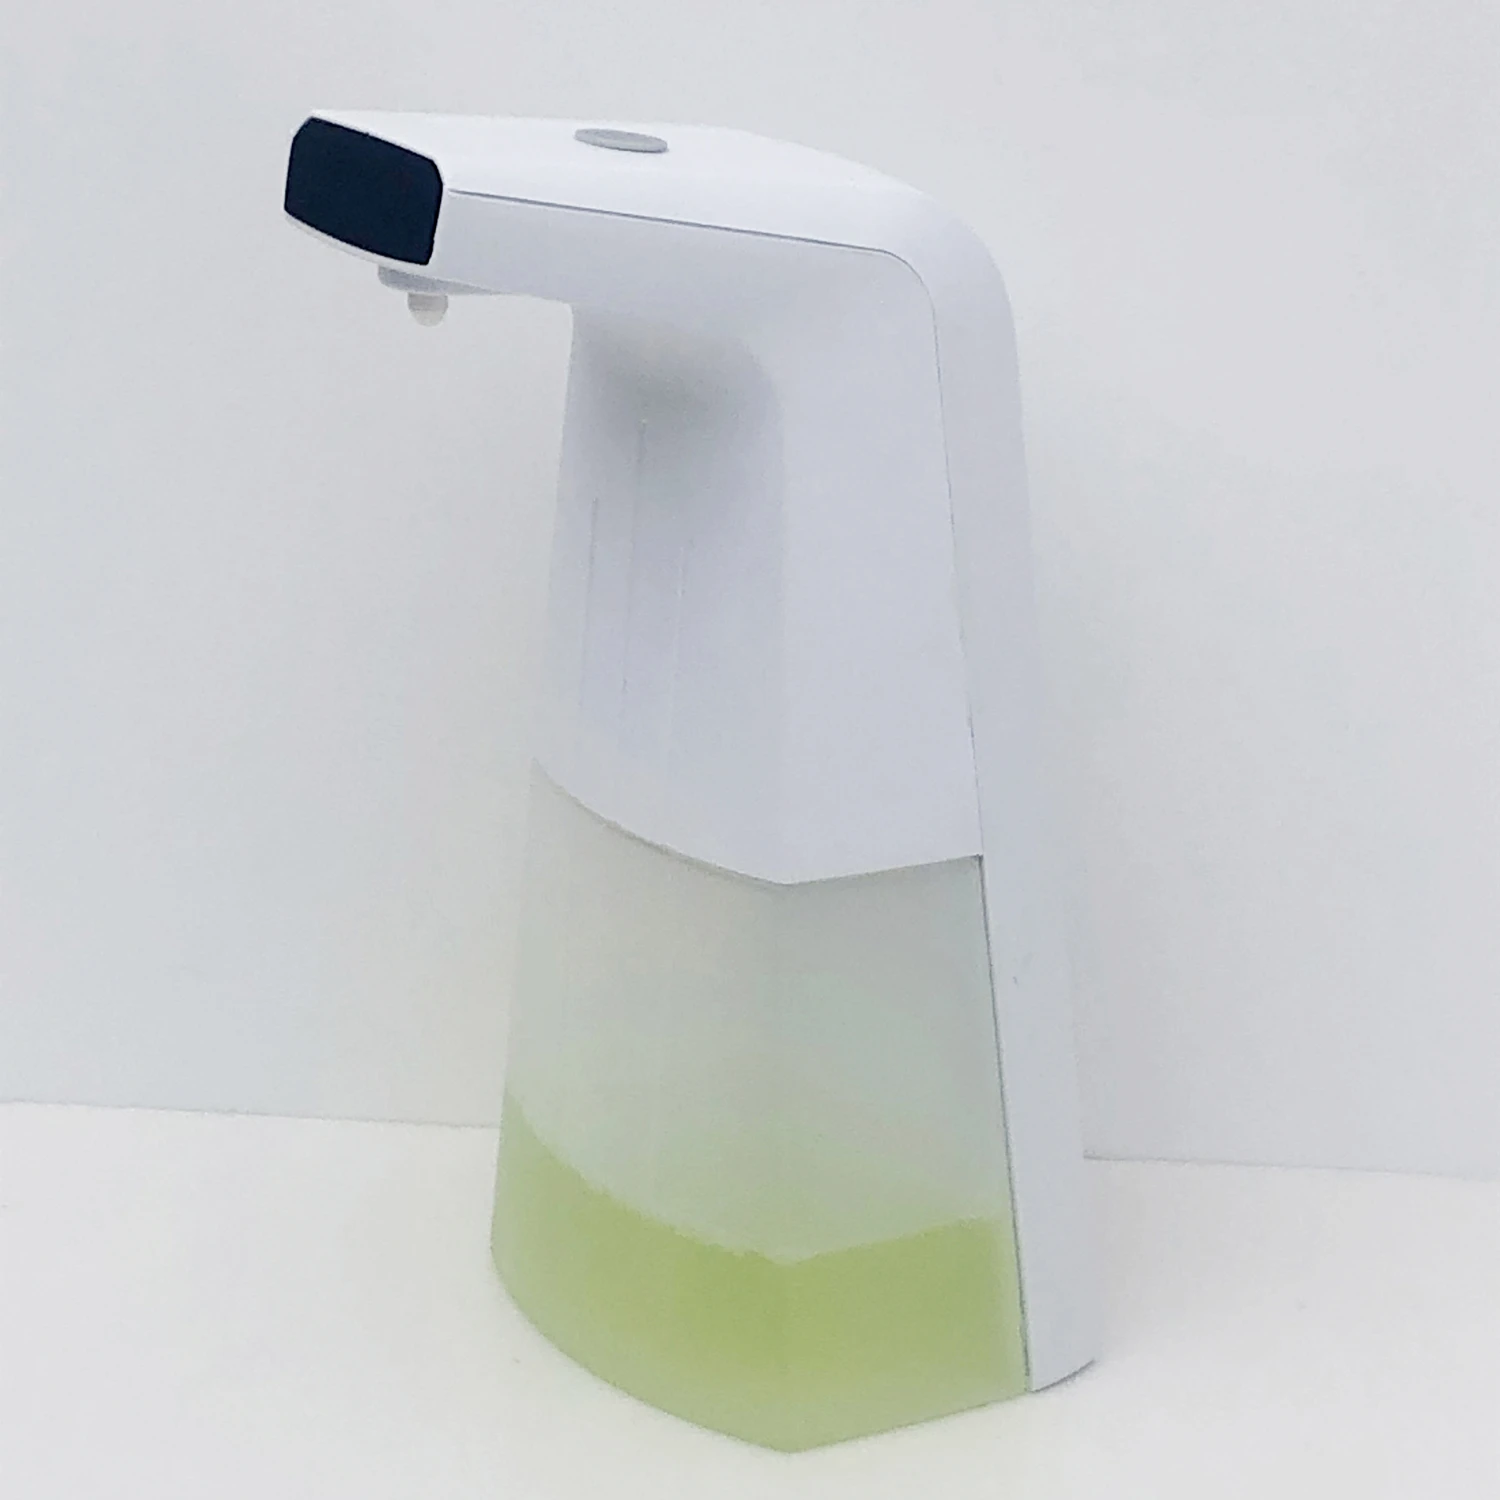 Automatic hand sanitizer dispenser handsfree soap dispenser desktop